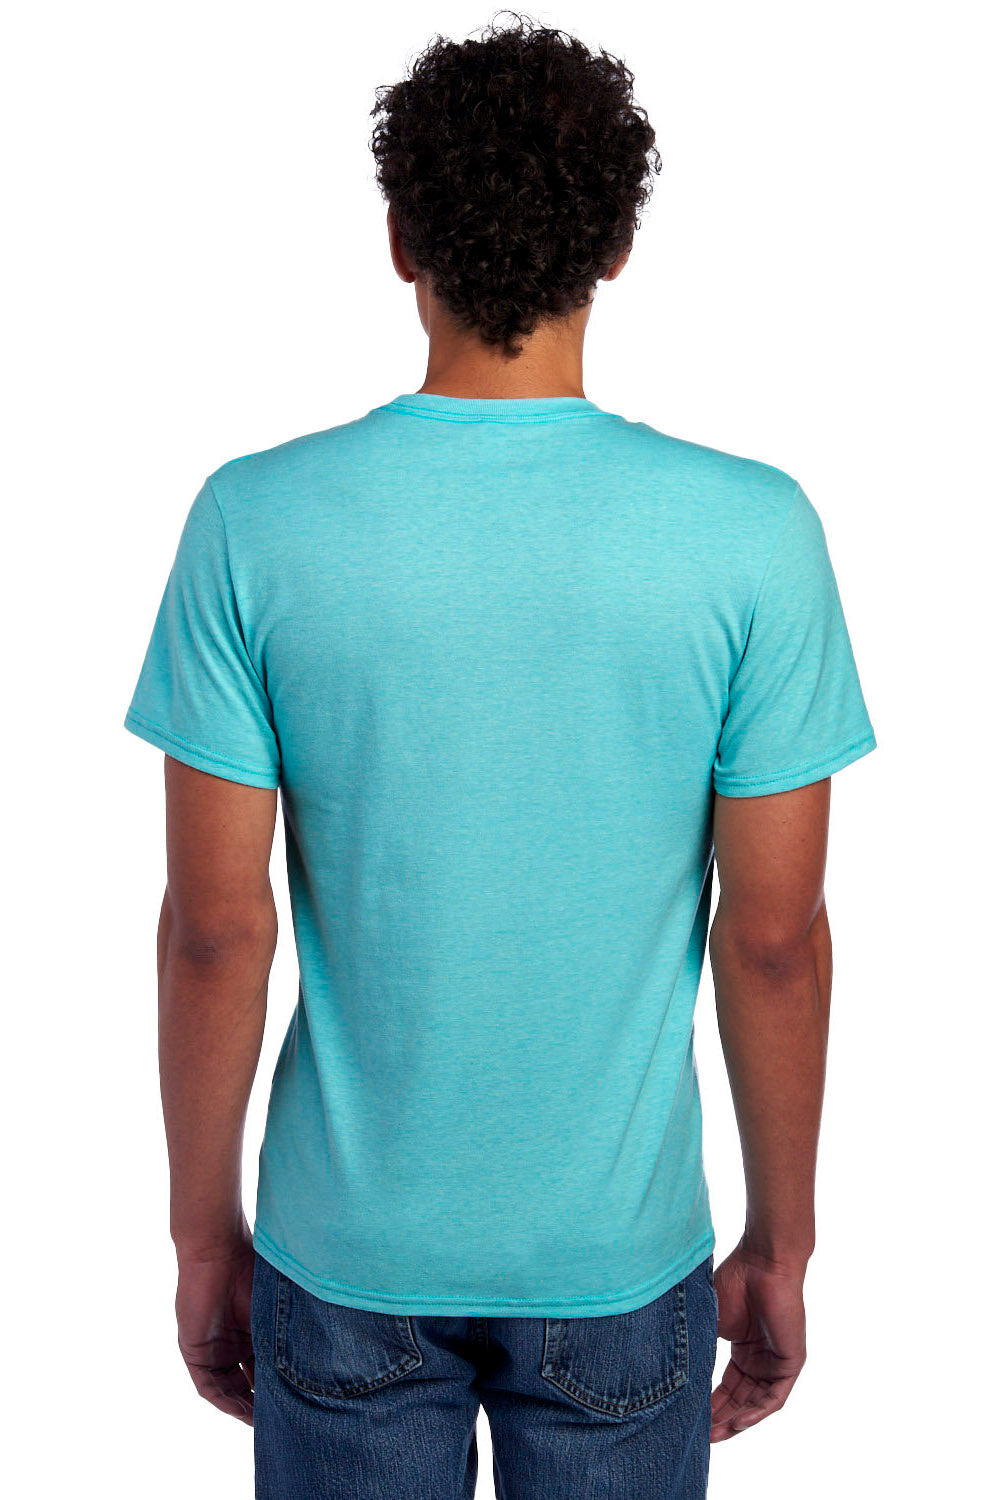 Jerzees 560MR/560M Mens Premium Blend Short Sleeve Crewneck T-Shirt Heather Aqua Back